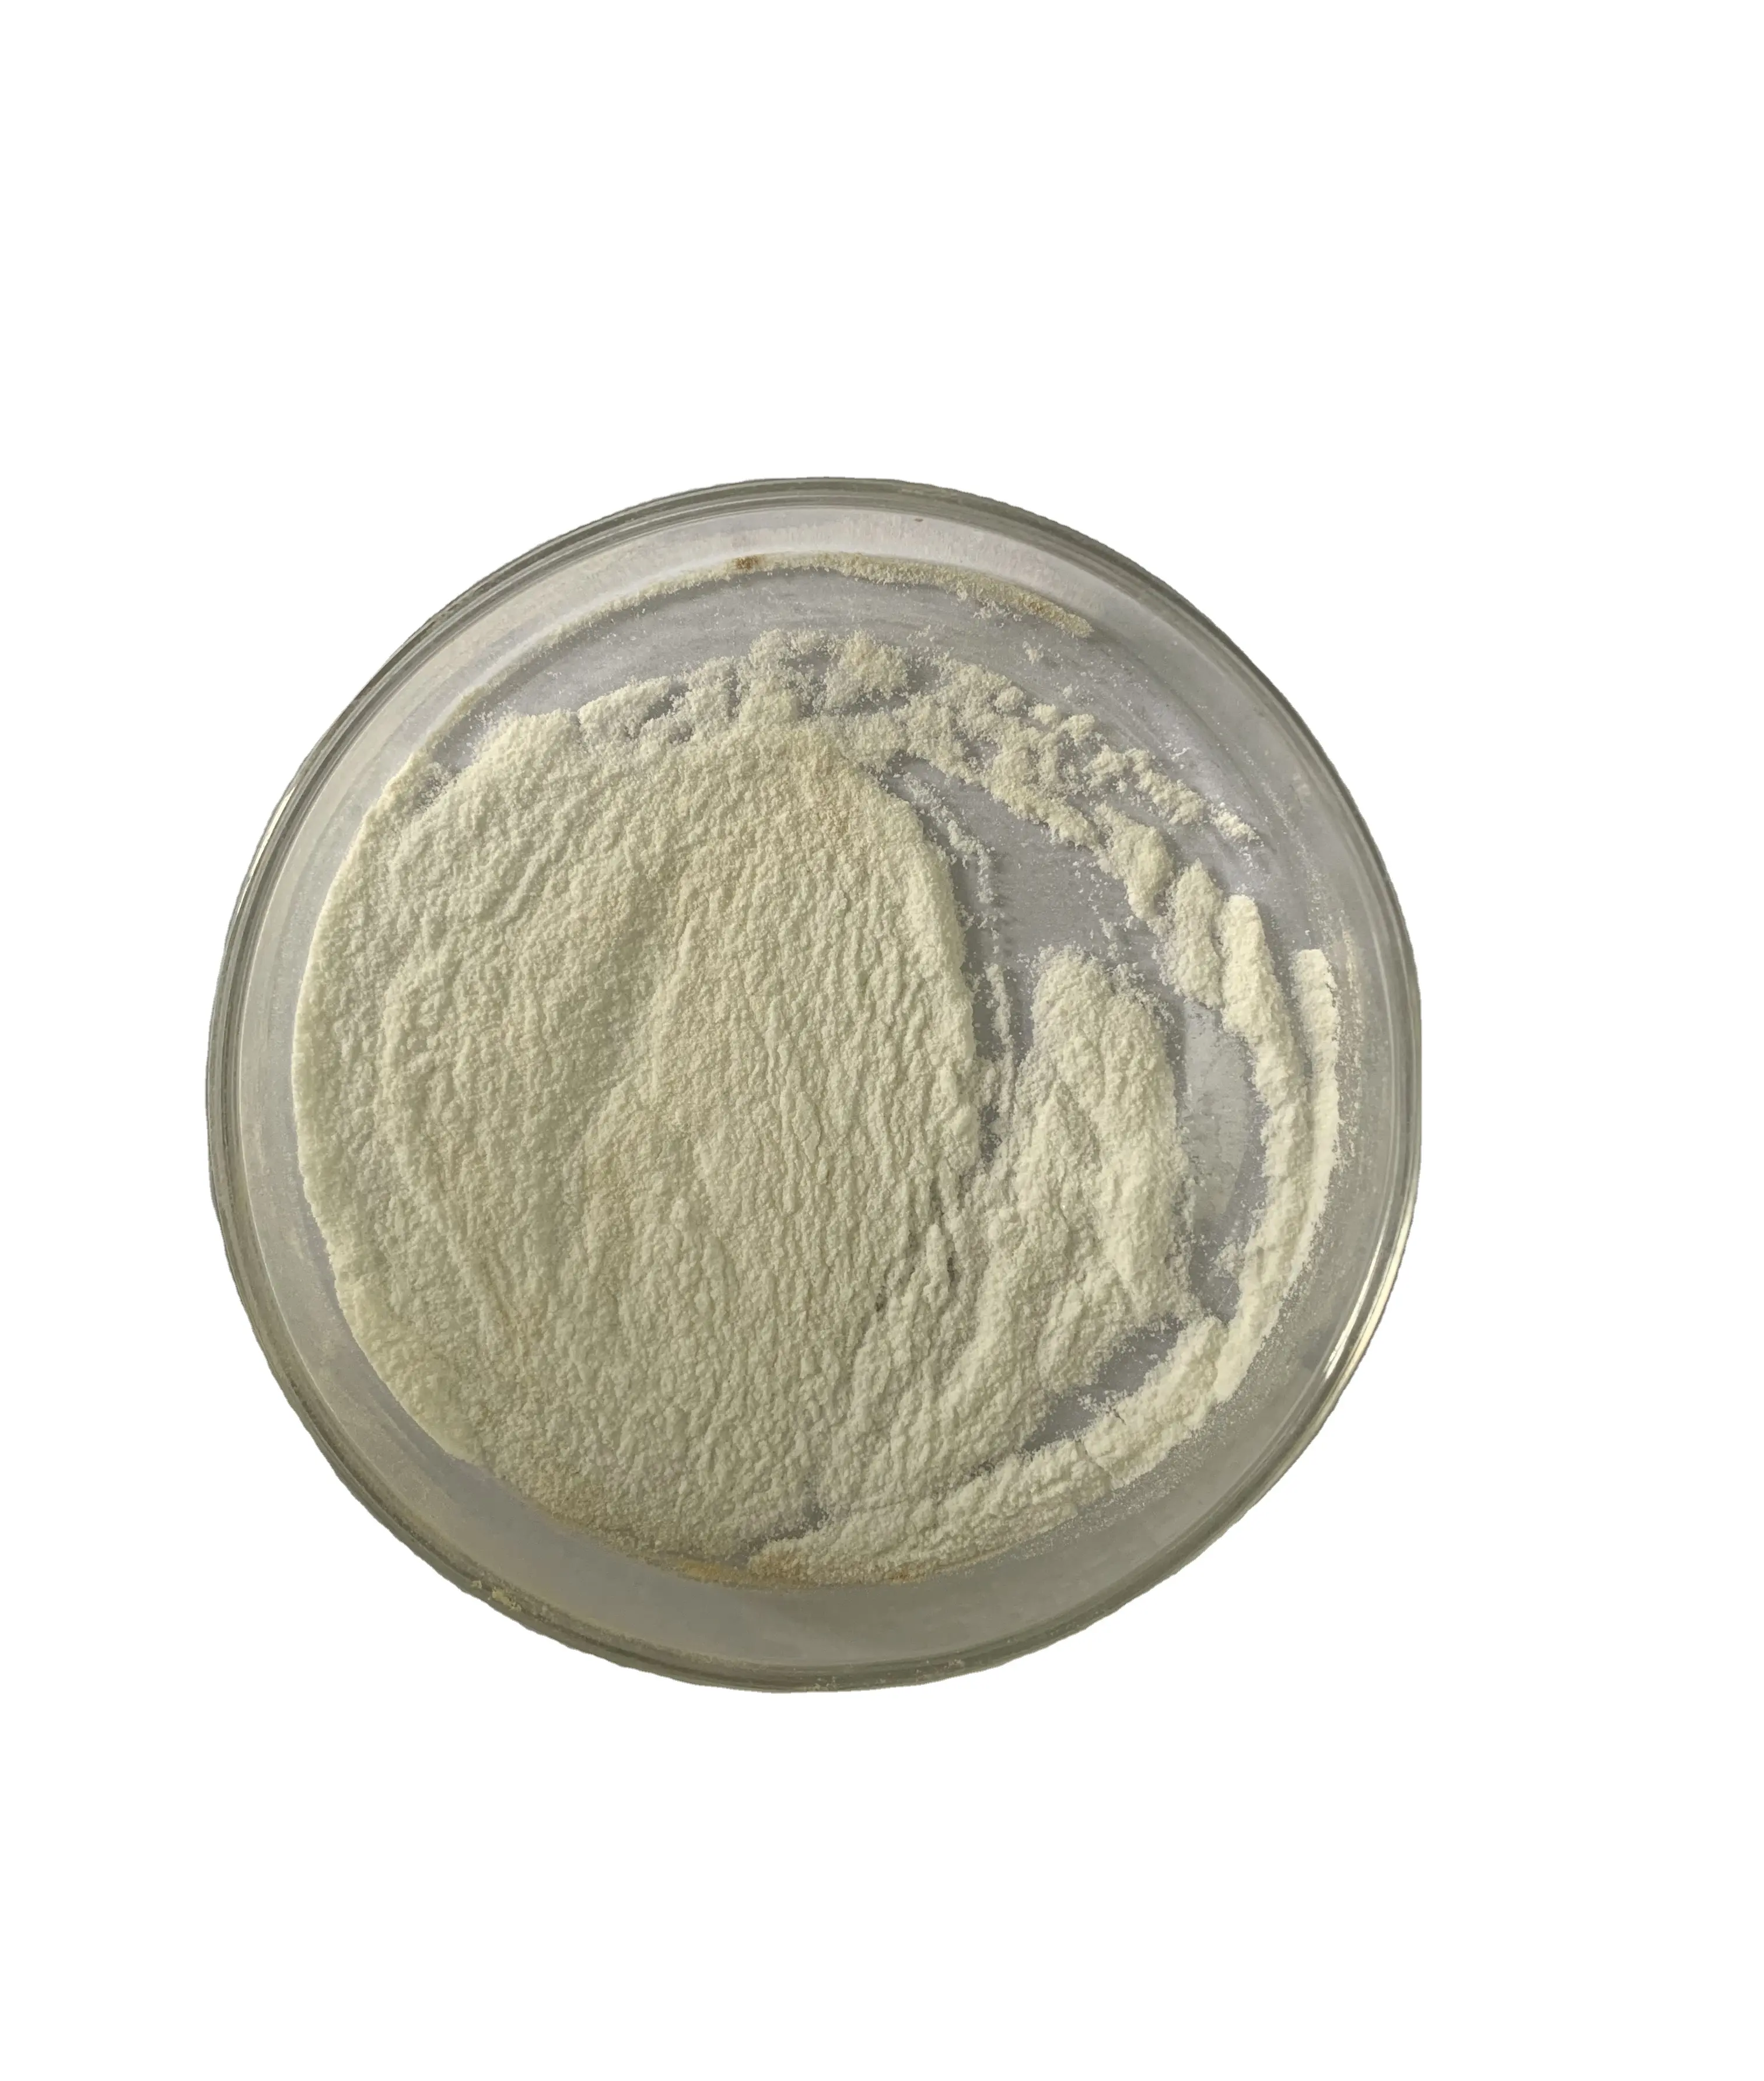 सुक्रोज Processing-COSP105P-Powder-Compound एंजाइम सुक्रोज के लिए प्रसंस्करण